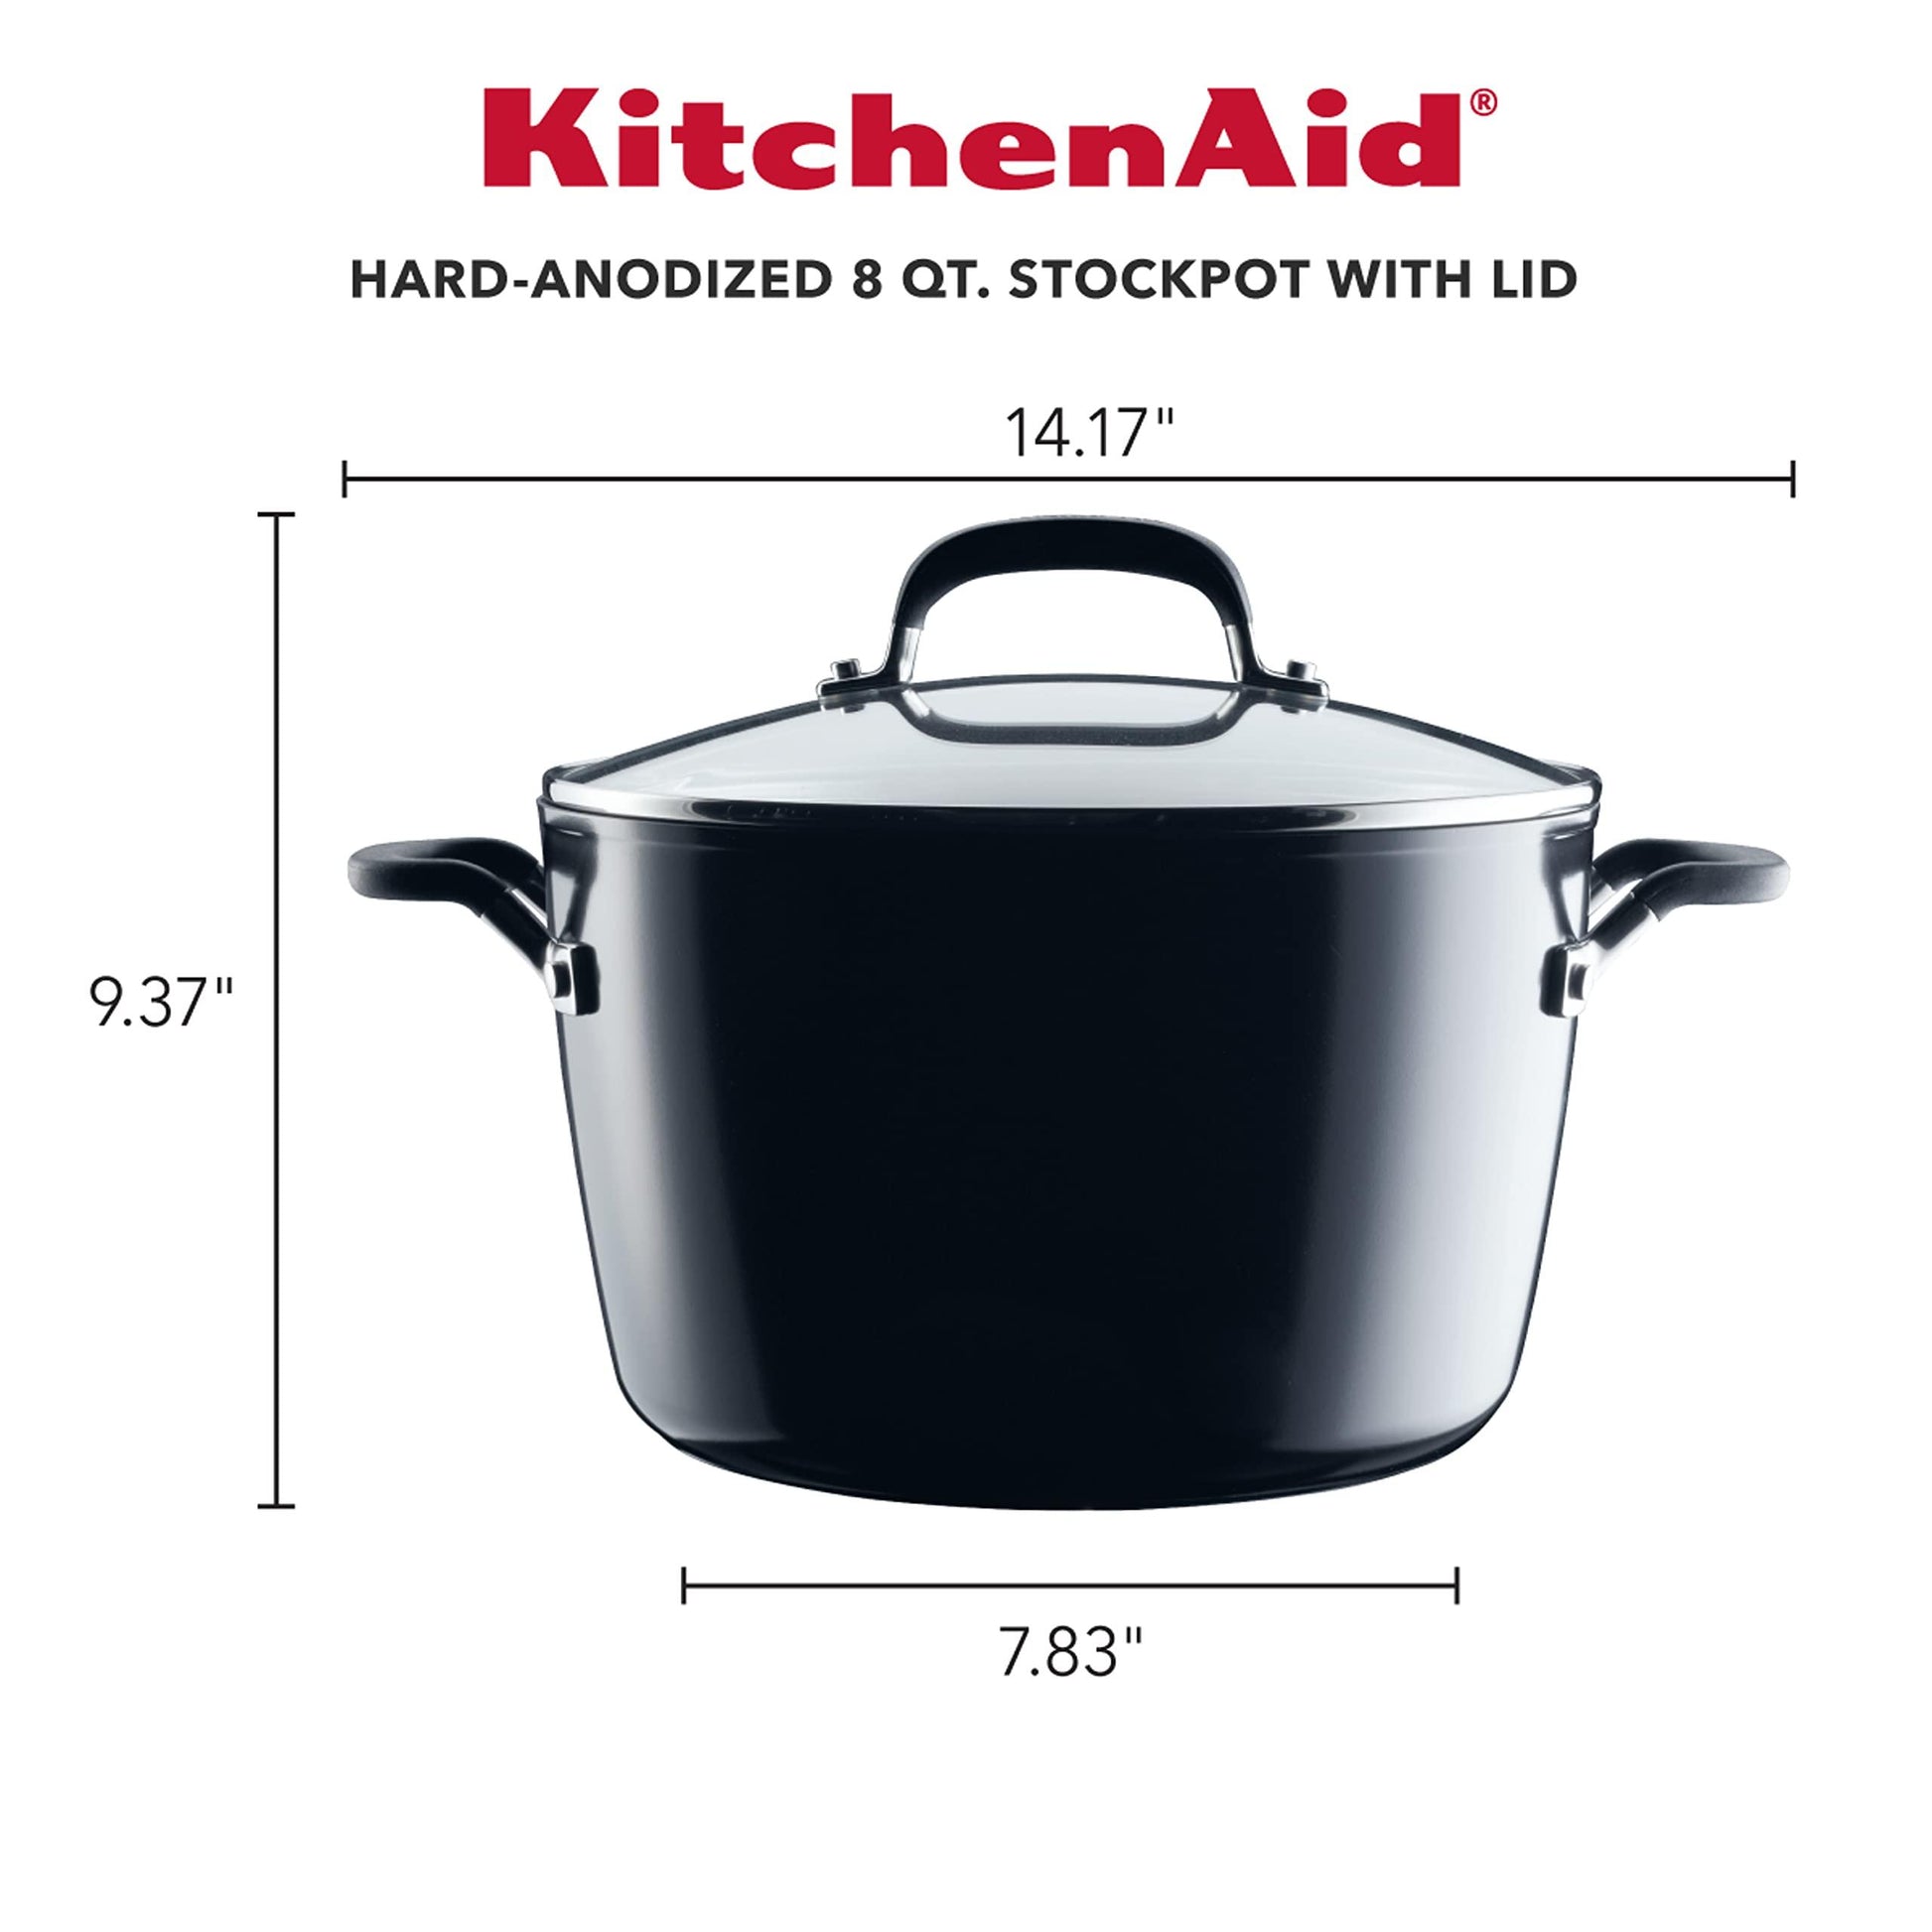 KitchenAid Hard Anodized Nonstick Stockpot with Lid, 8 Quart, Onyx Black - CookCave